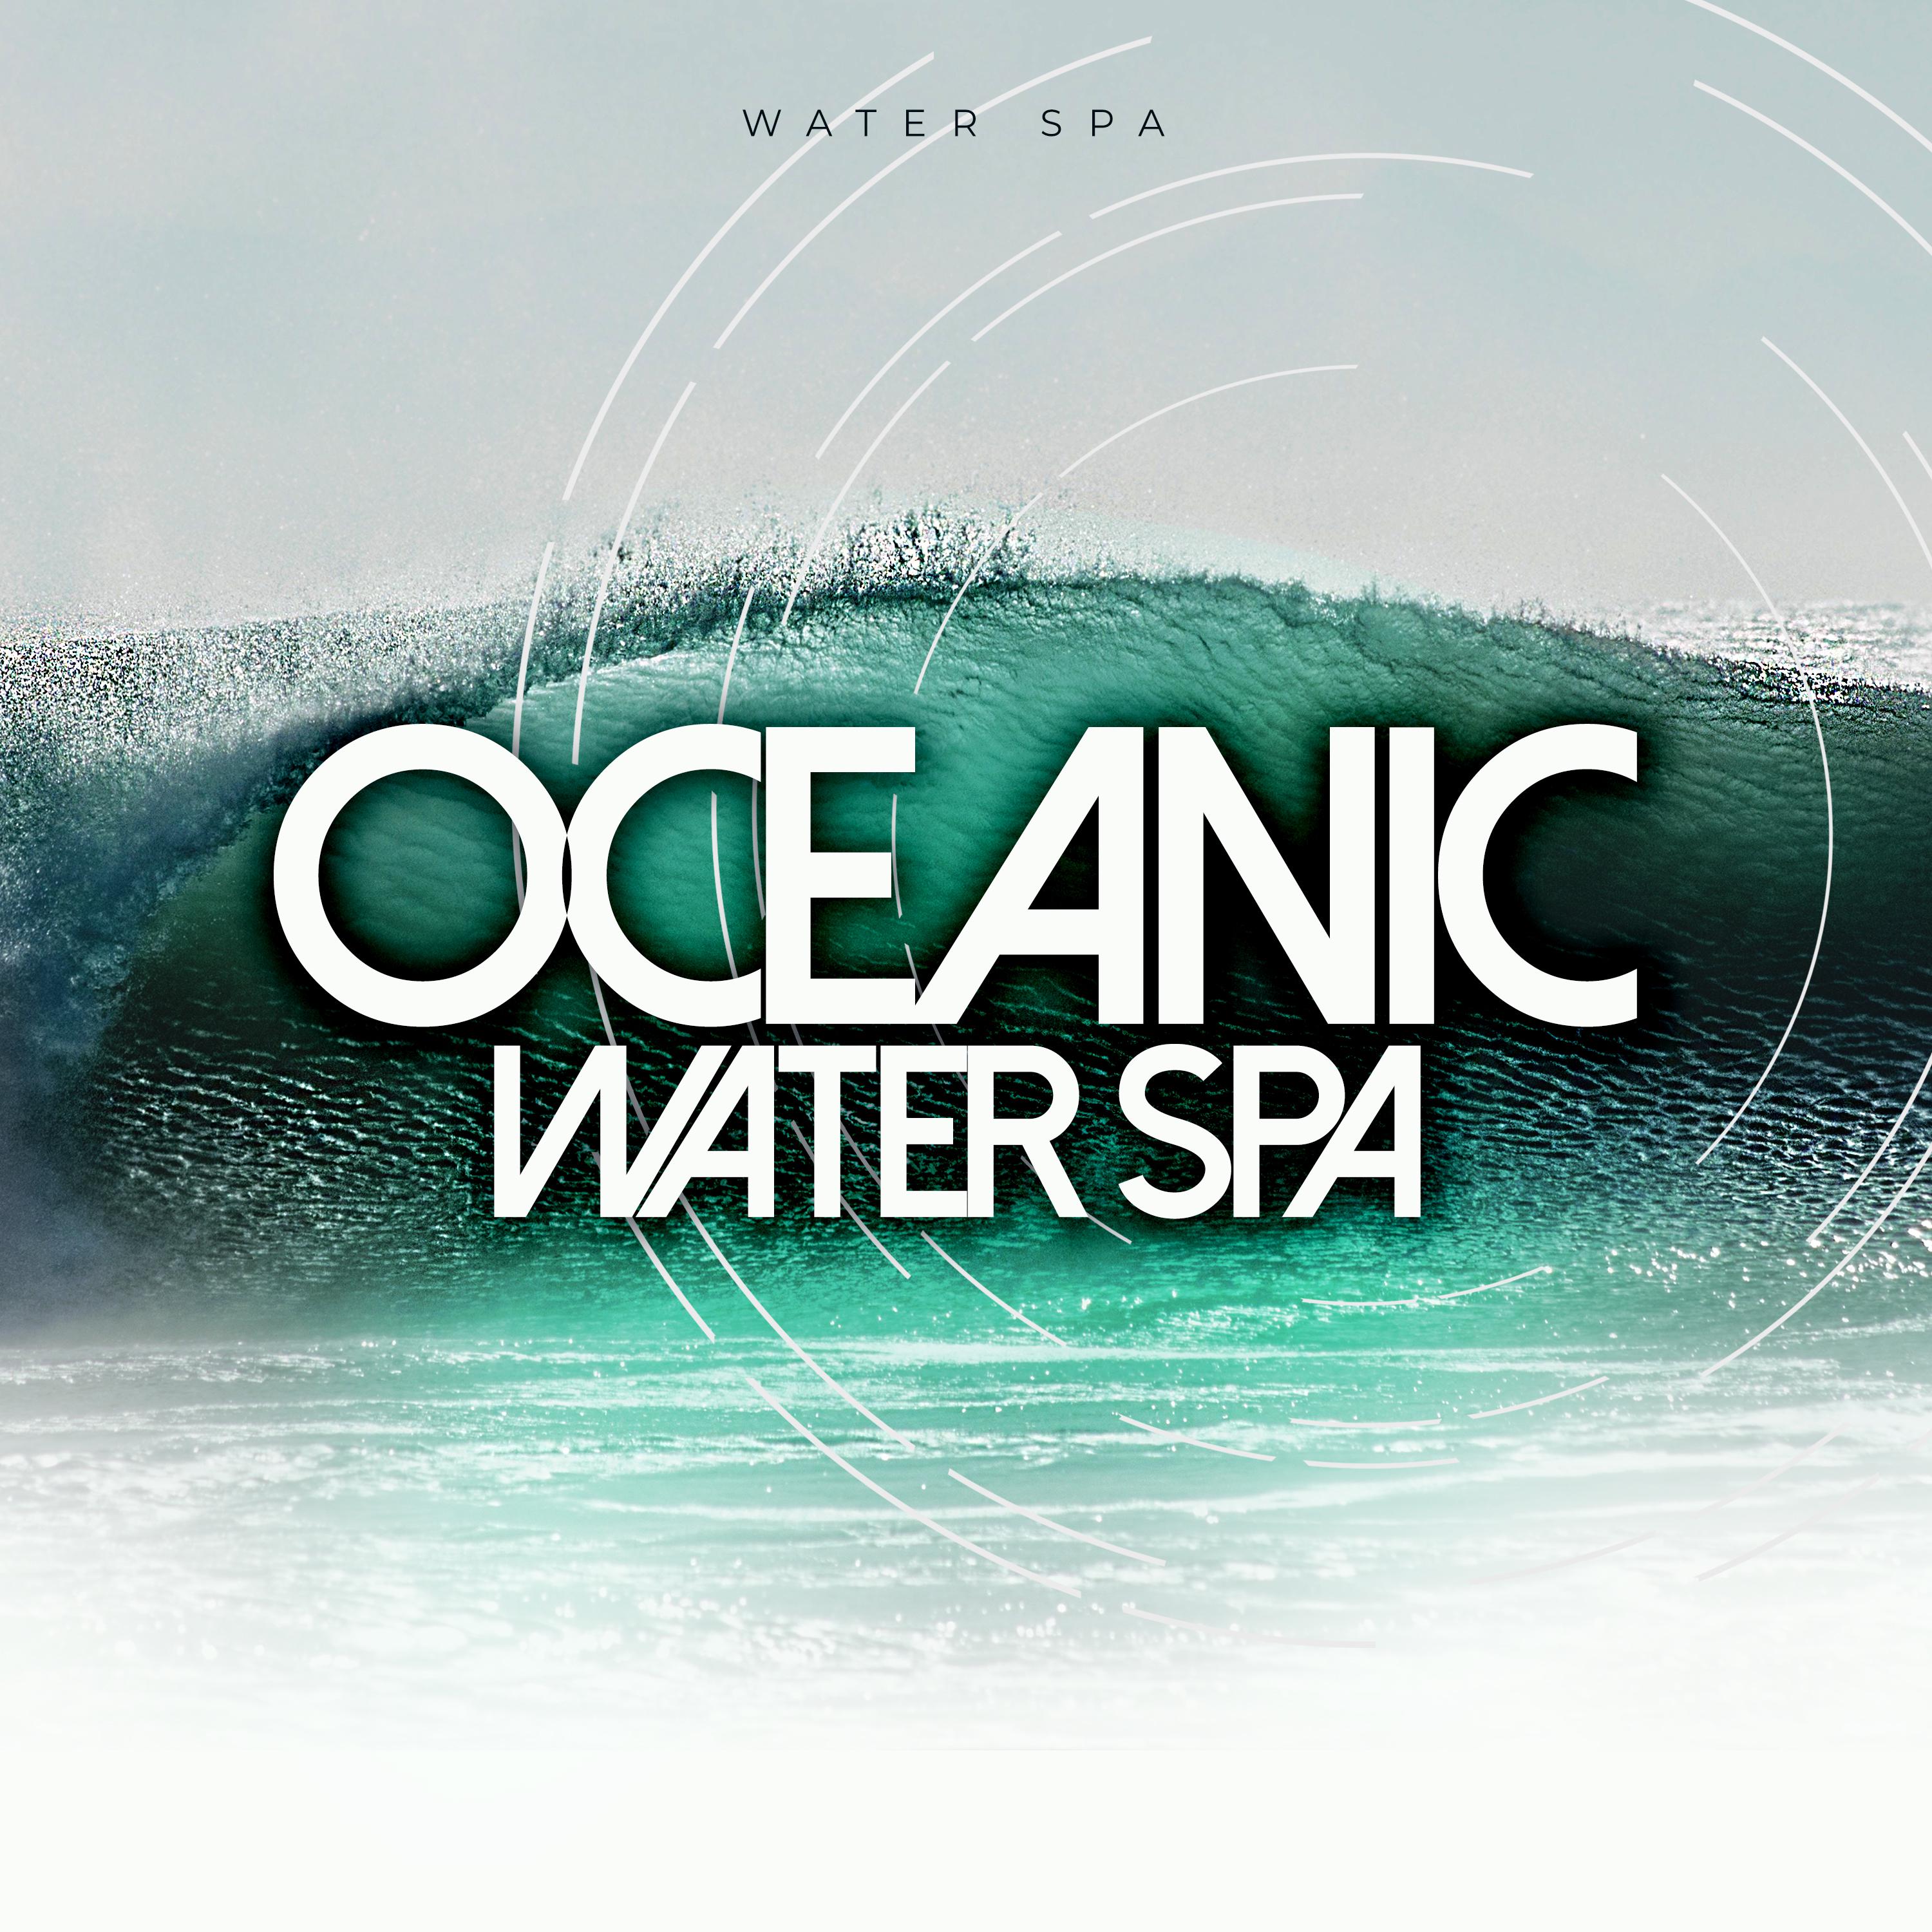 Oceanic Water Spa